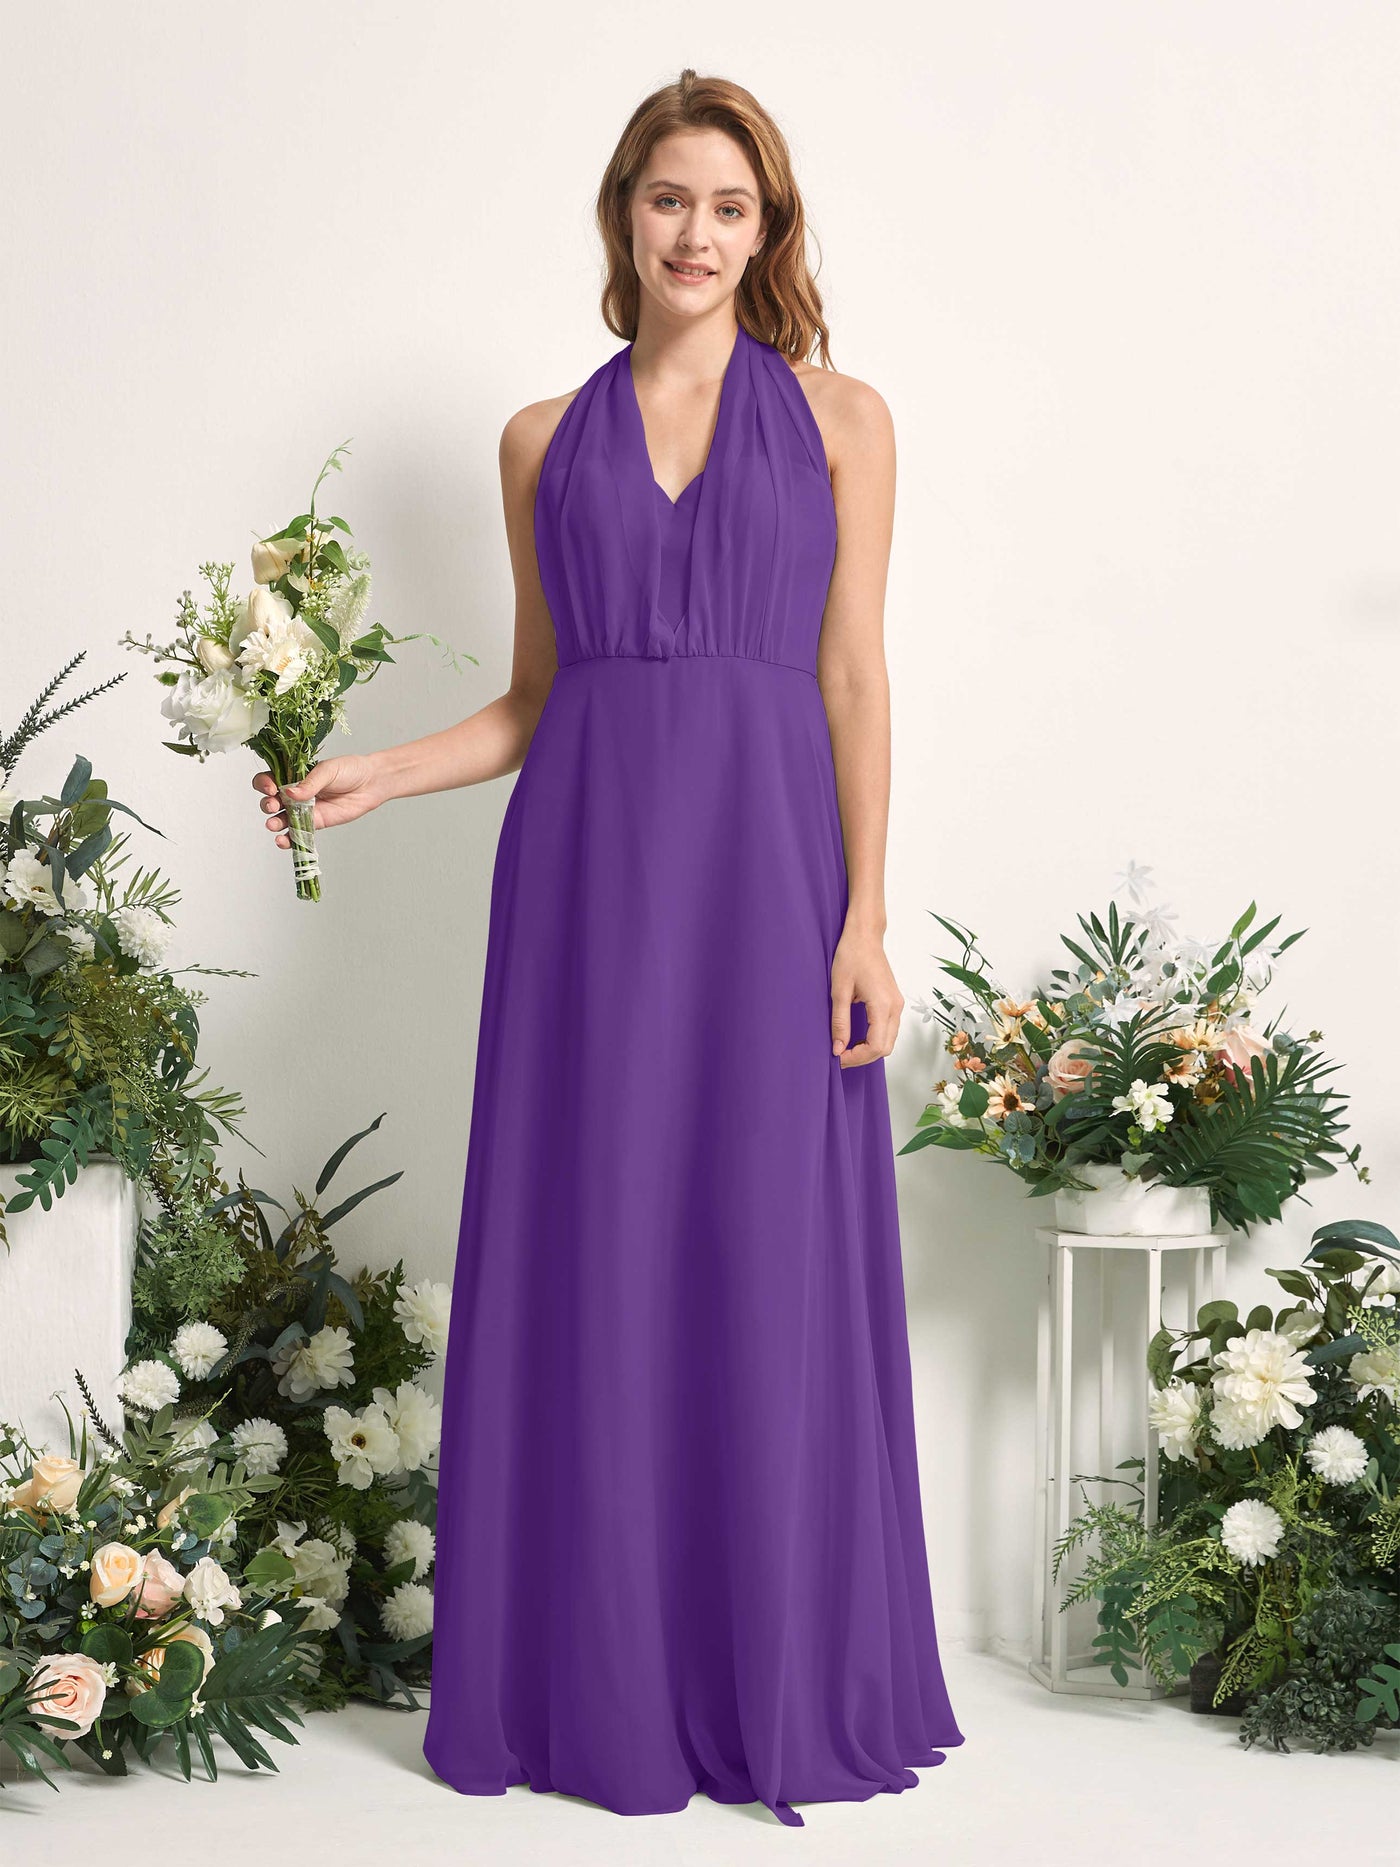 Regency Bridesmaid Dresses Bridesmaid Dress A-line Chiffon Halter Full Length Short Sleeves Wedding Party Dress (81226328)#color_regency